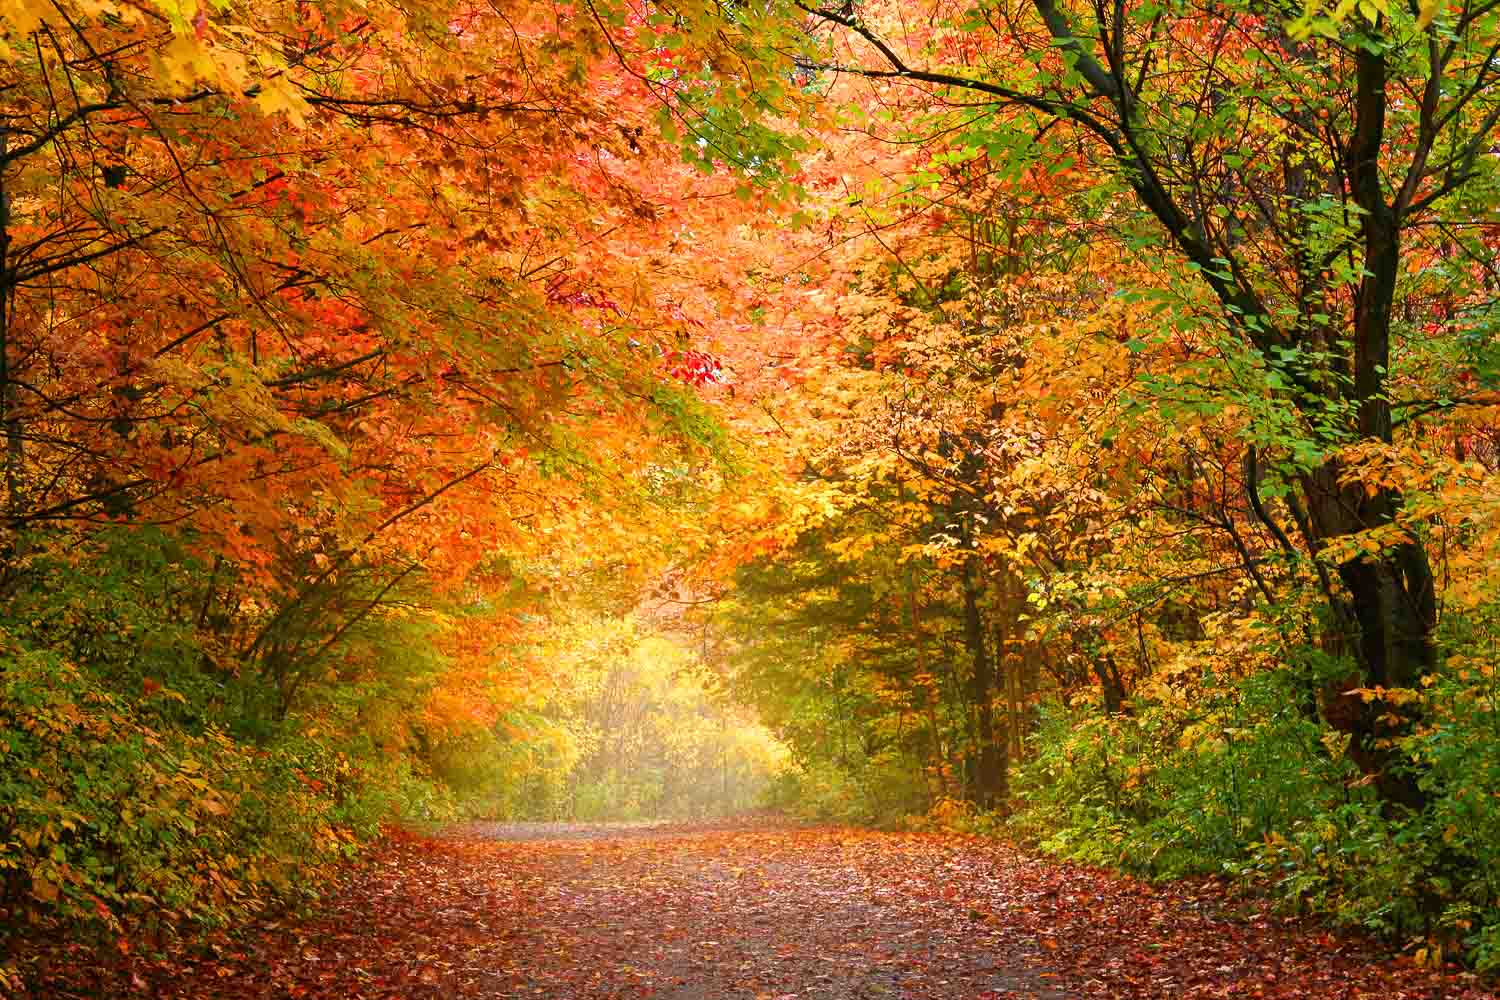 A serene autumn path with trees showcasing vibrant fall foliage.